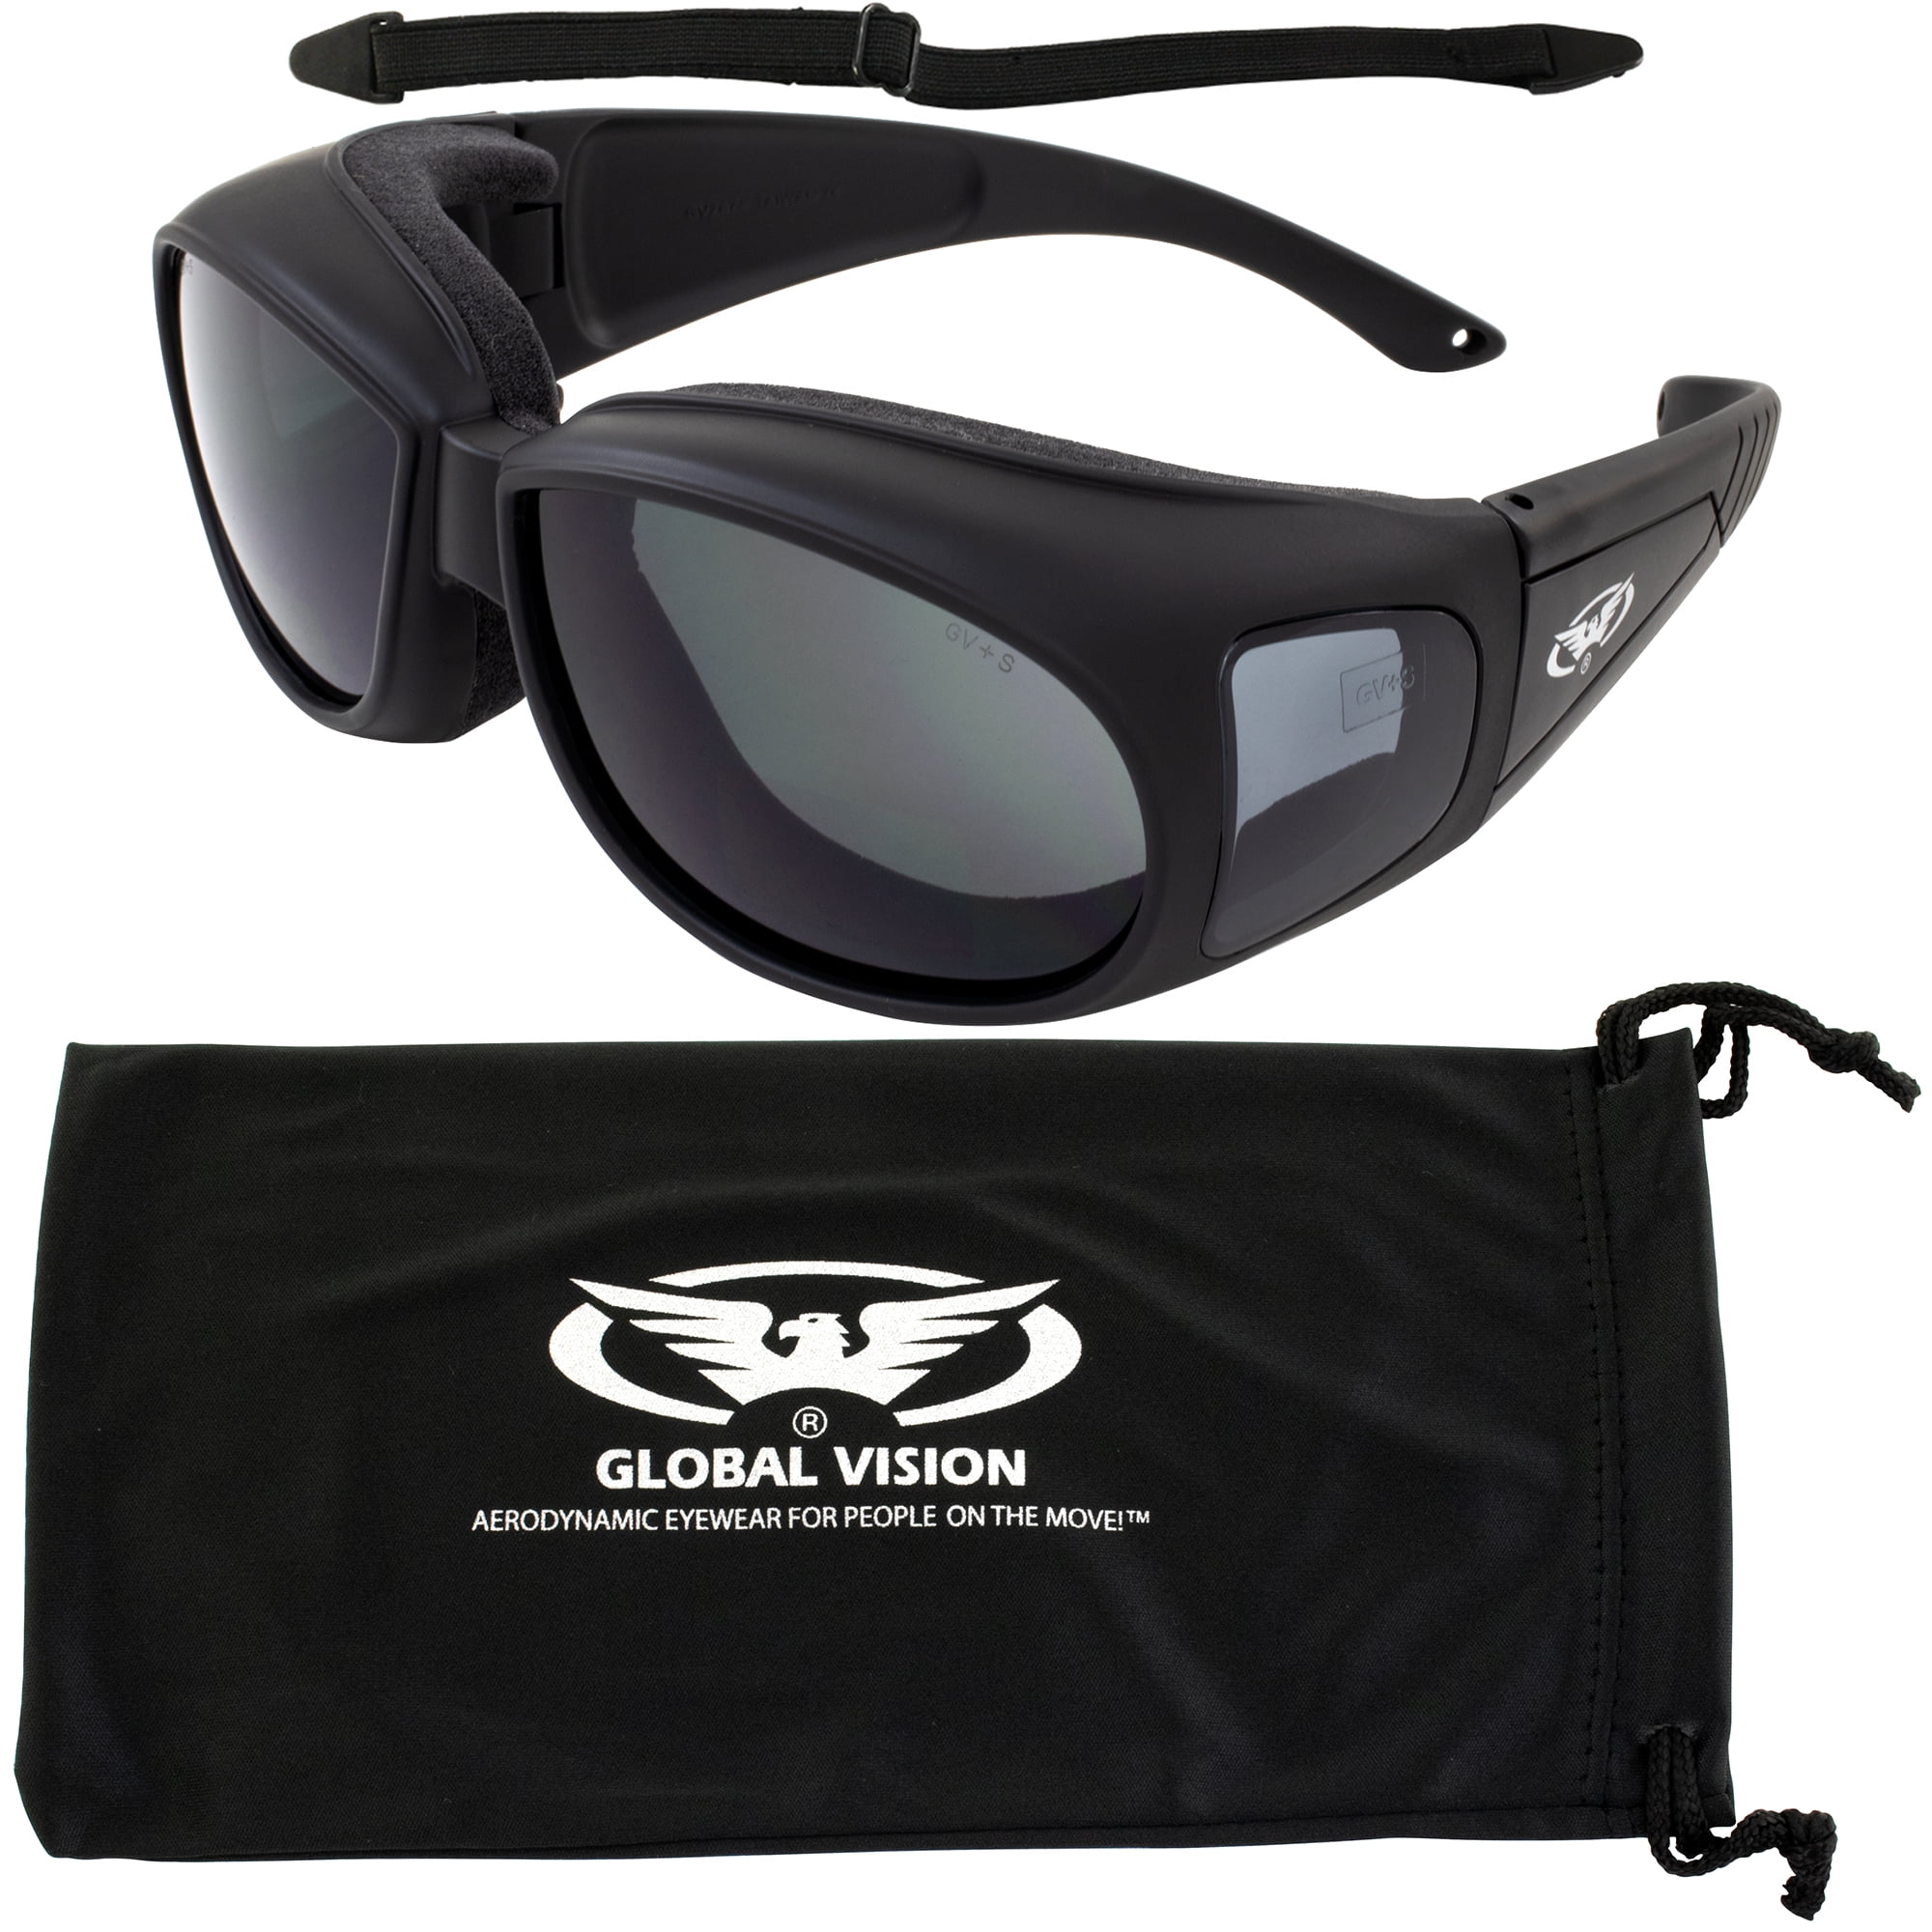 Motorcycle Bike Safety Glasses Anti Glare Sunglasses Goggles Eyes Protection 